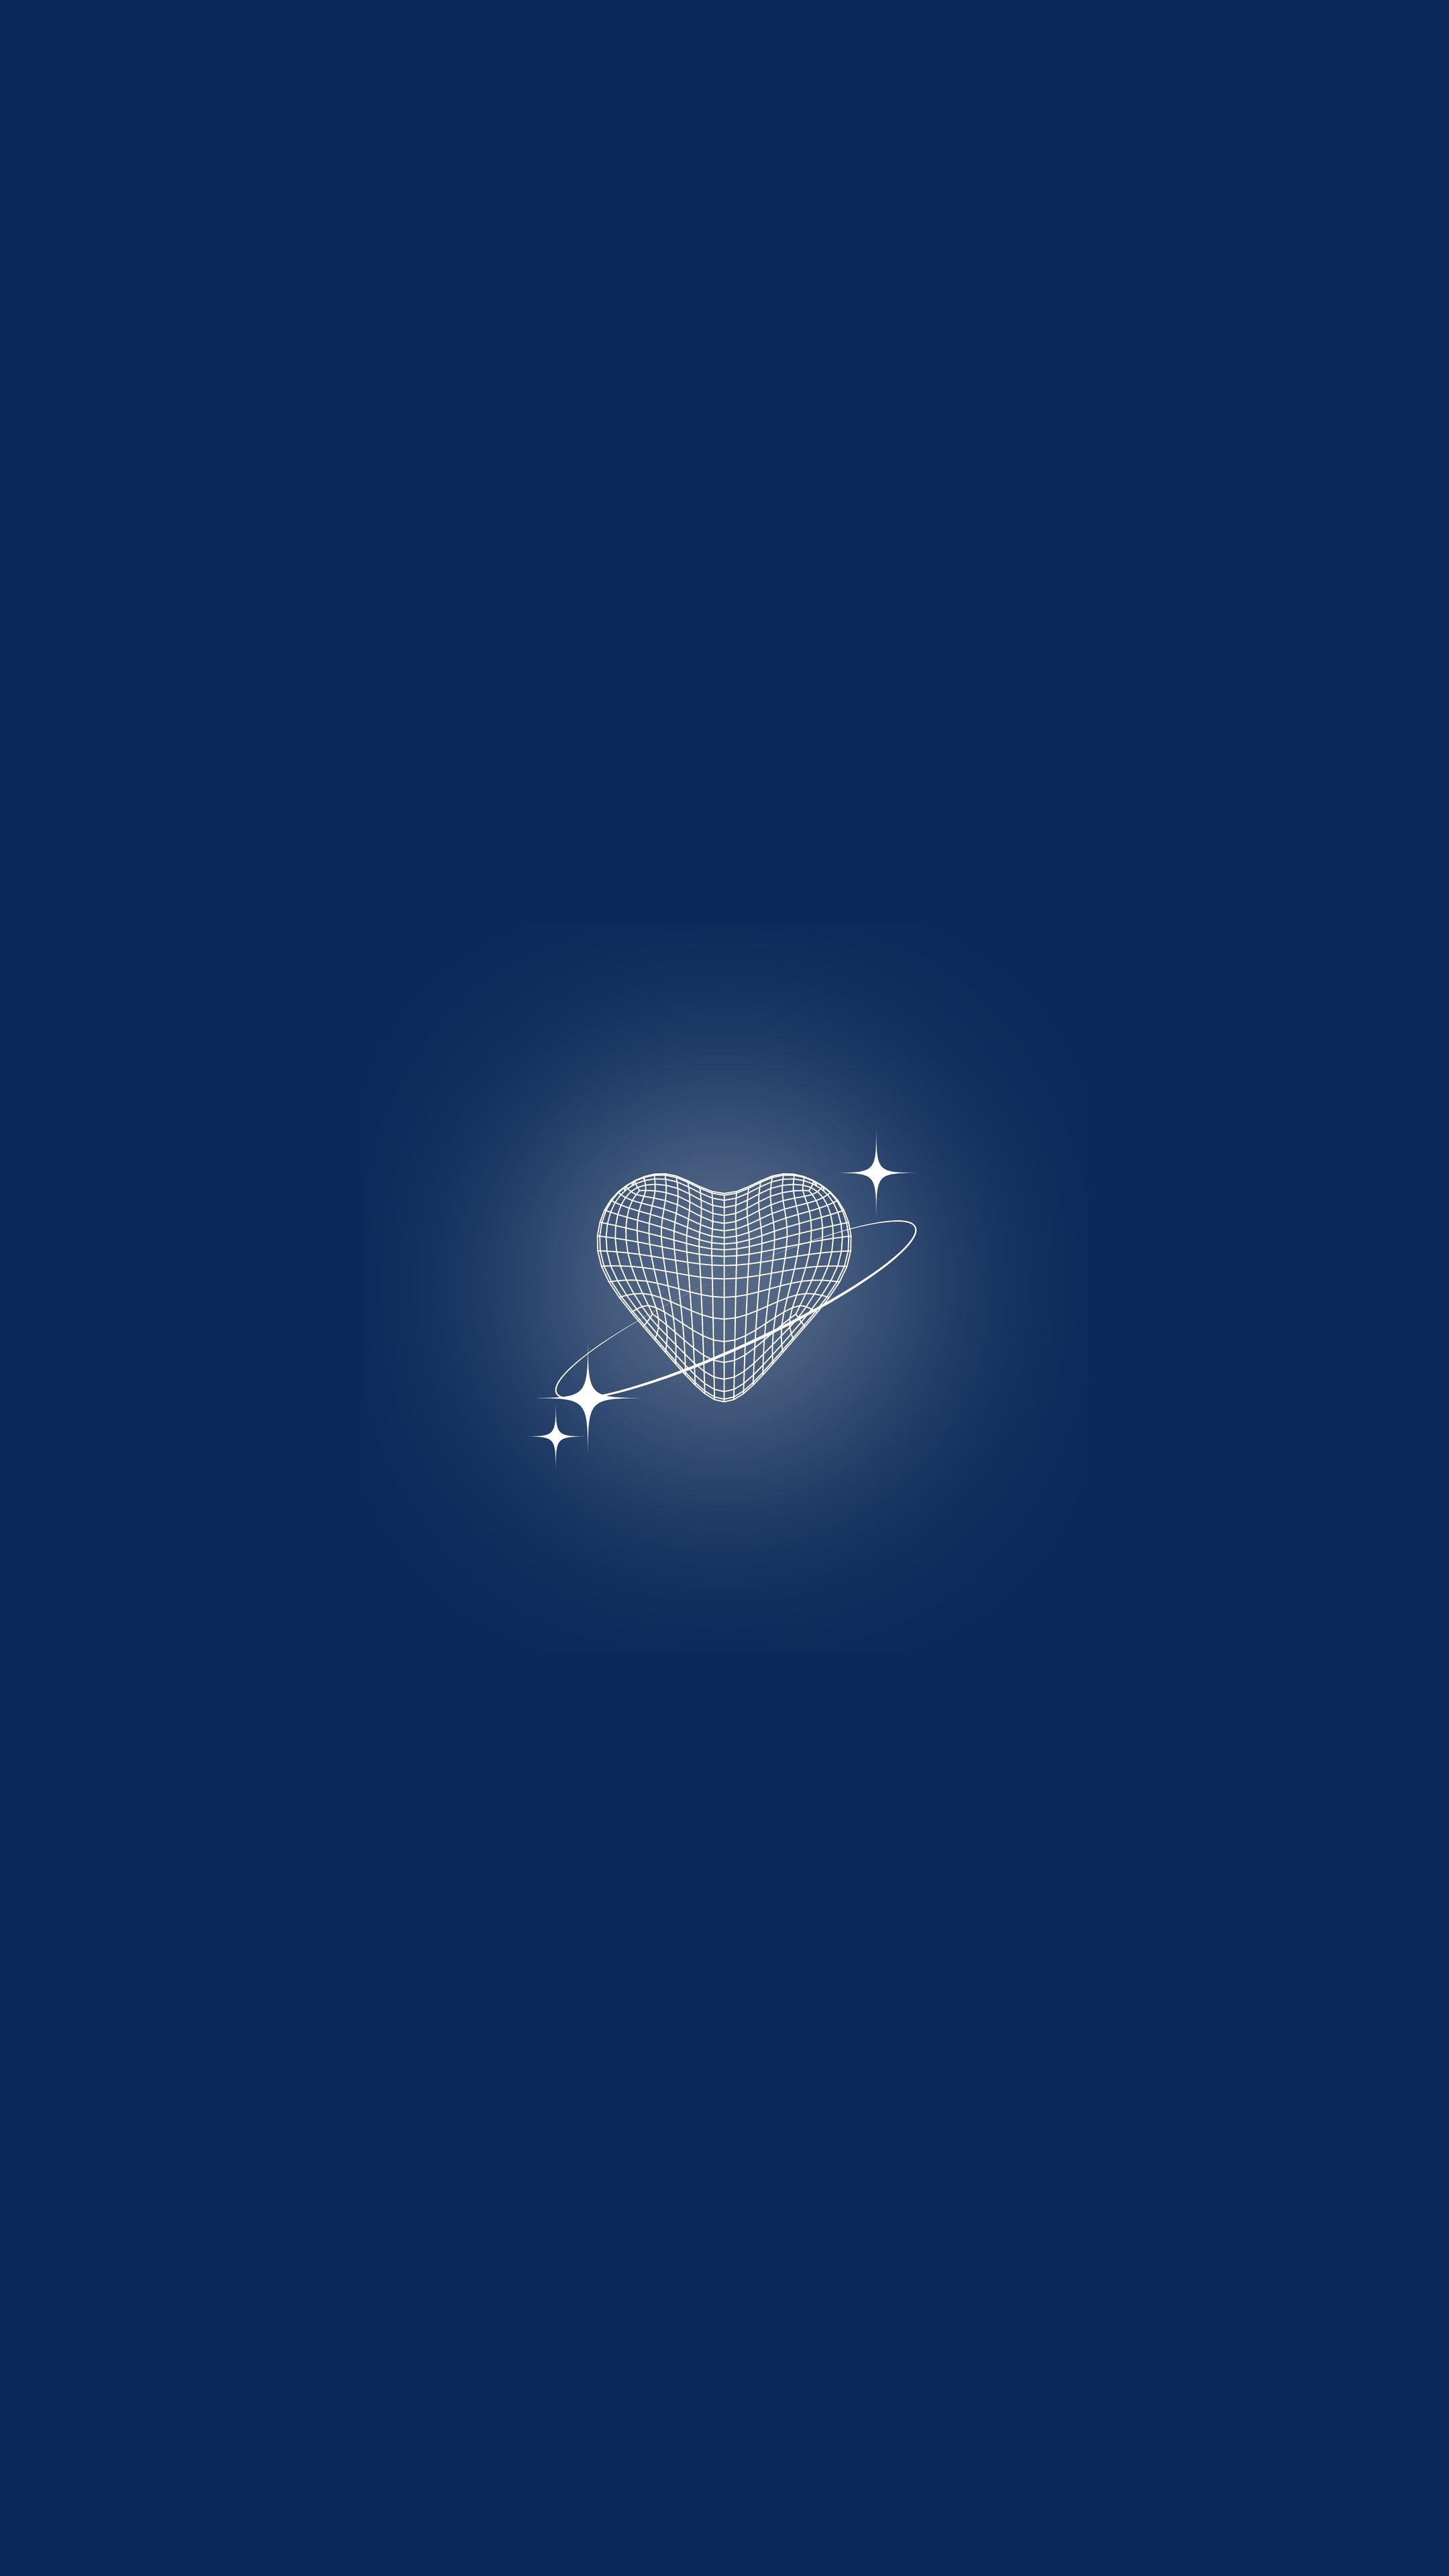 Shining Heart on Dark Blue Background Wallpaper[c656dc8c75984ca4b8d4]